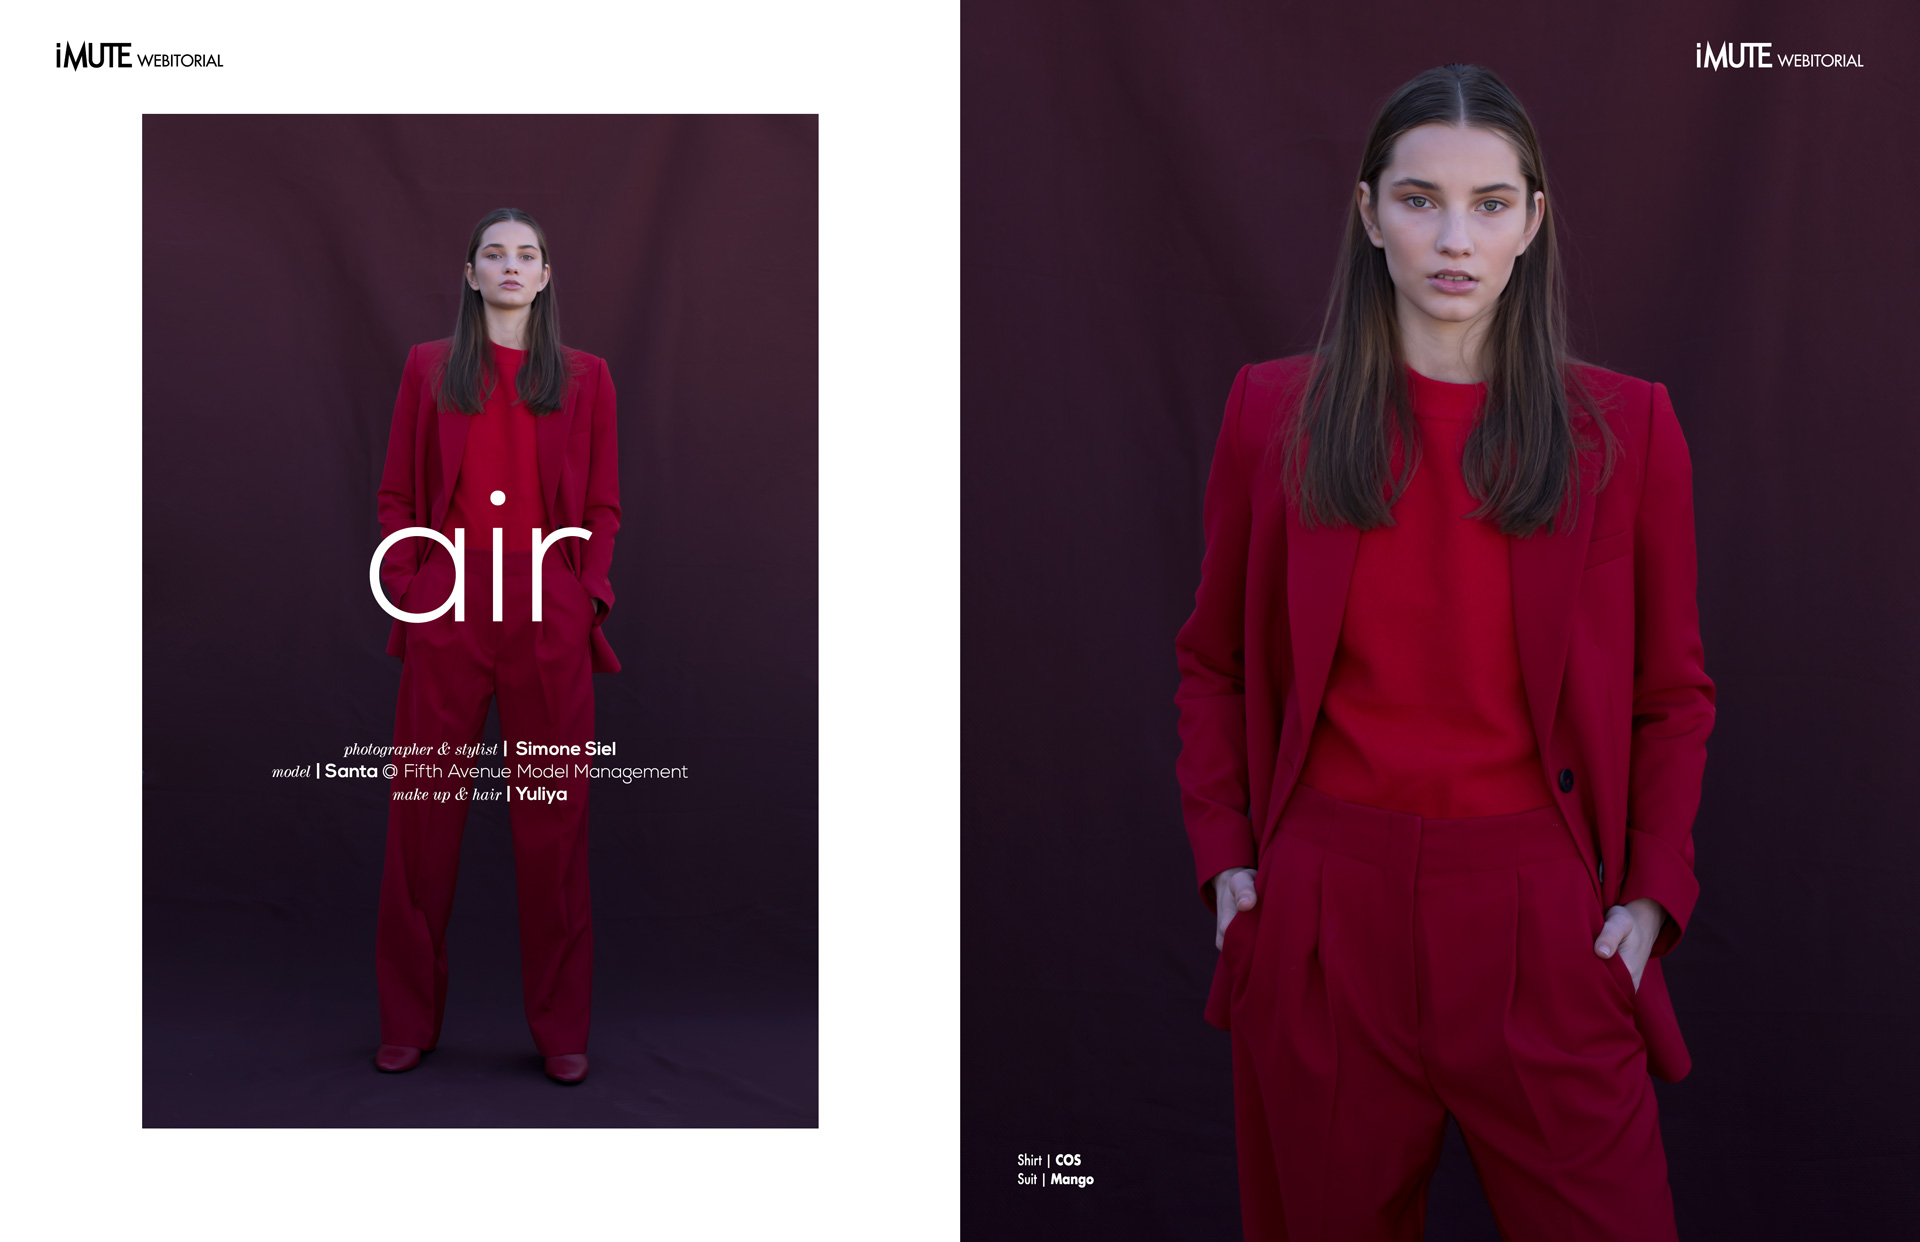 air webitorial for iMute Magazine Photographer & Stylist | Simone Siel Model | Santa @ Fifth Avenue Model Management Makeup & Hair | Yuliya